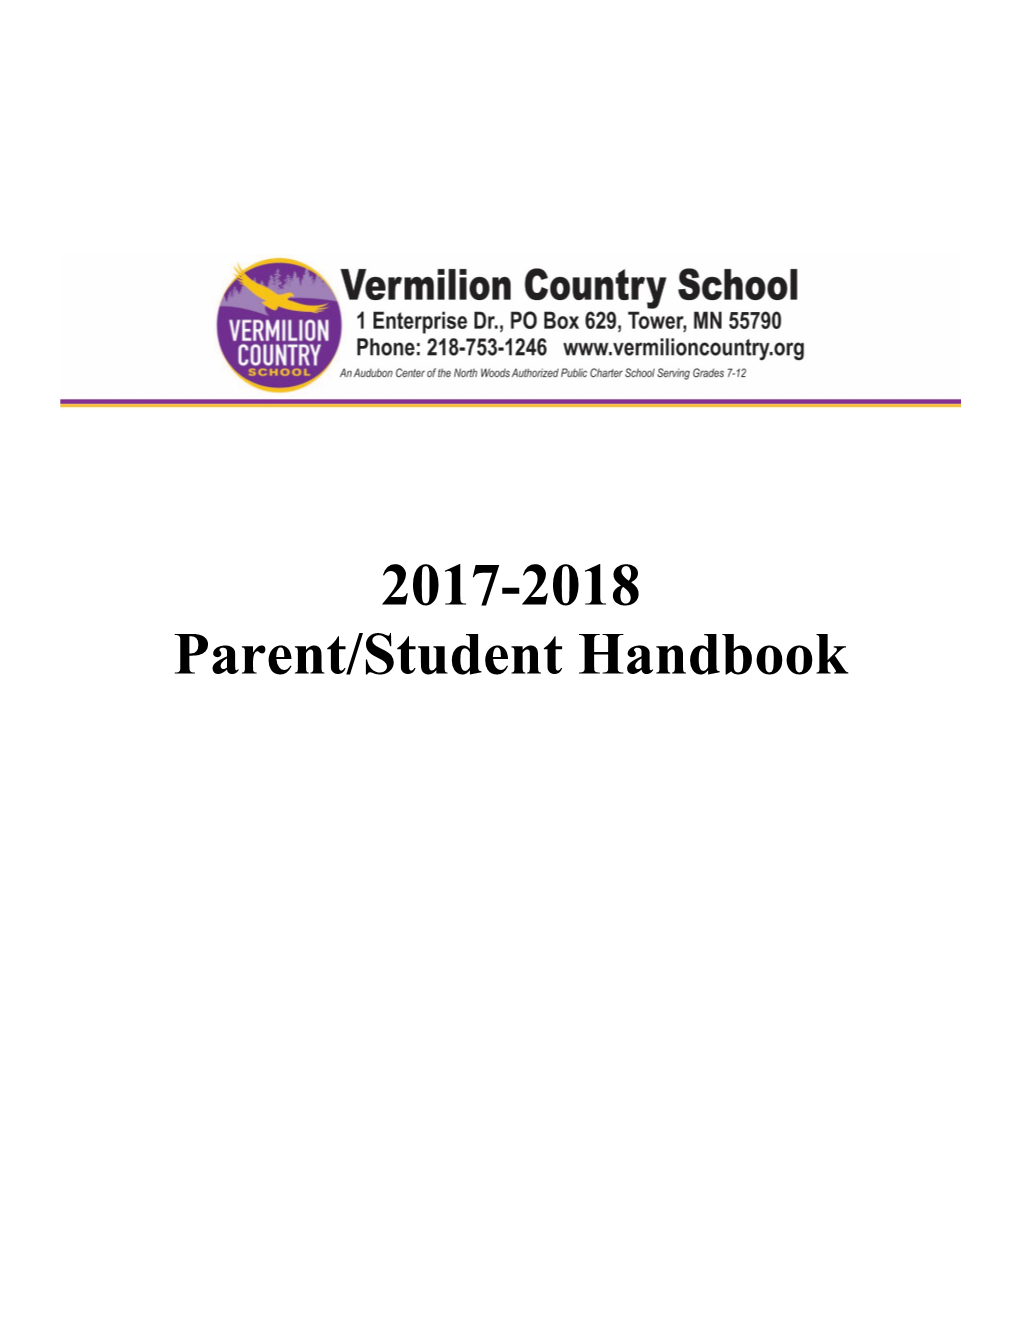 Parent/Student Handbook s5